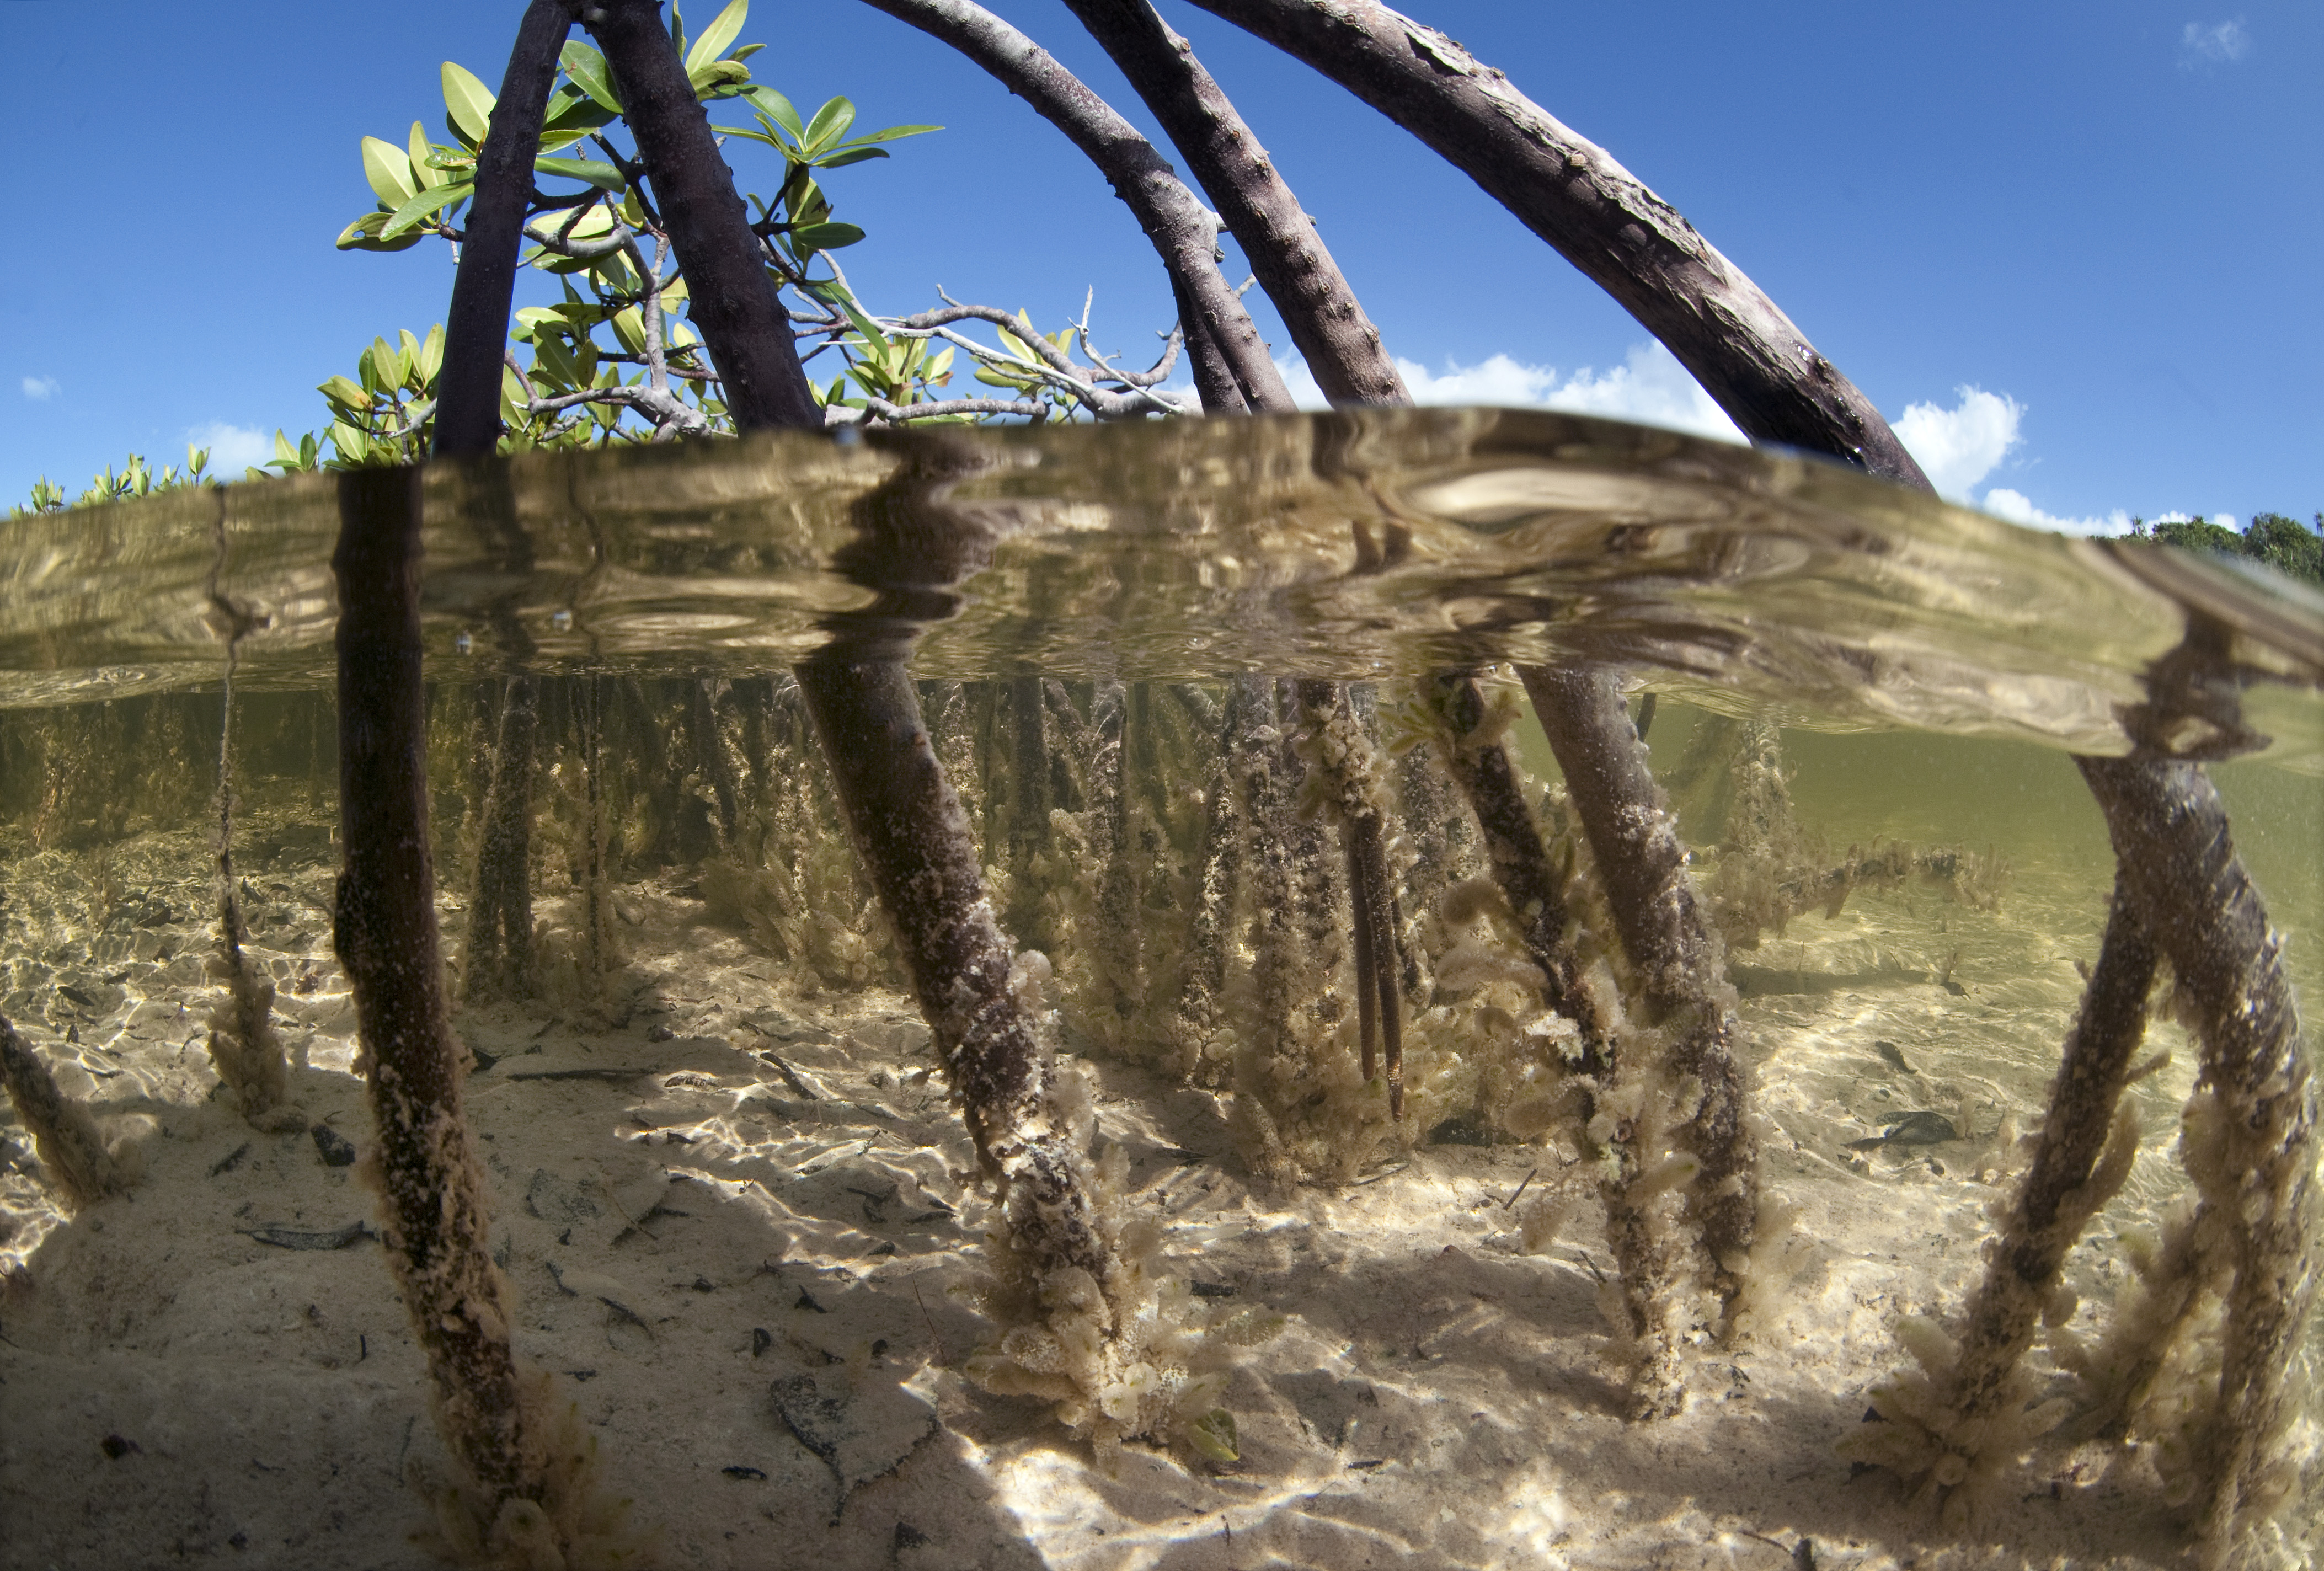 Underwater view of mangrove roots. 